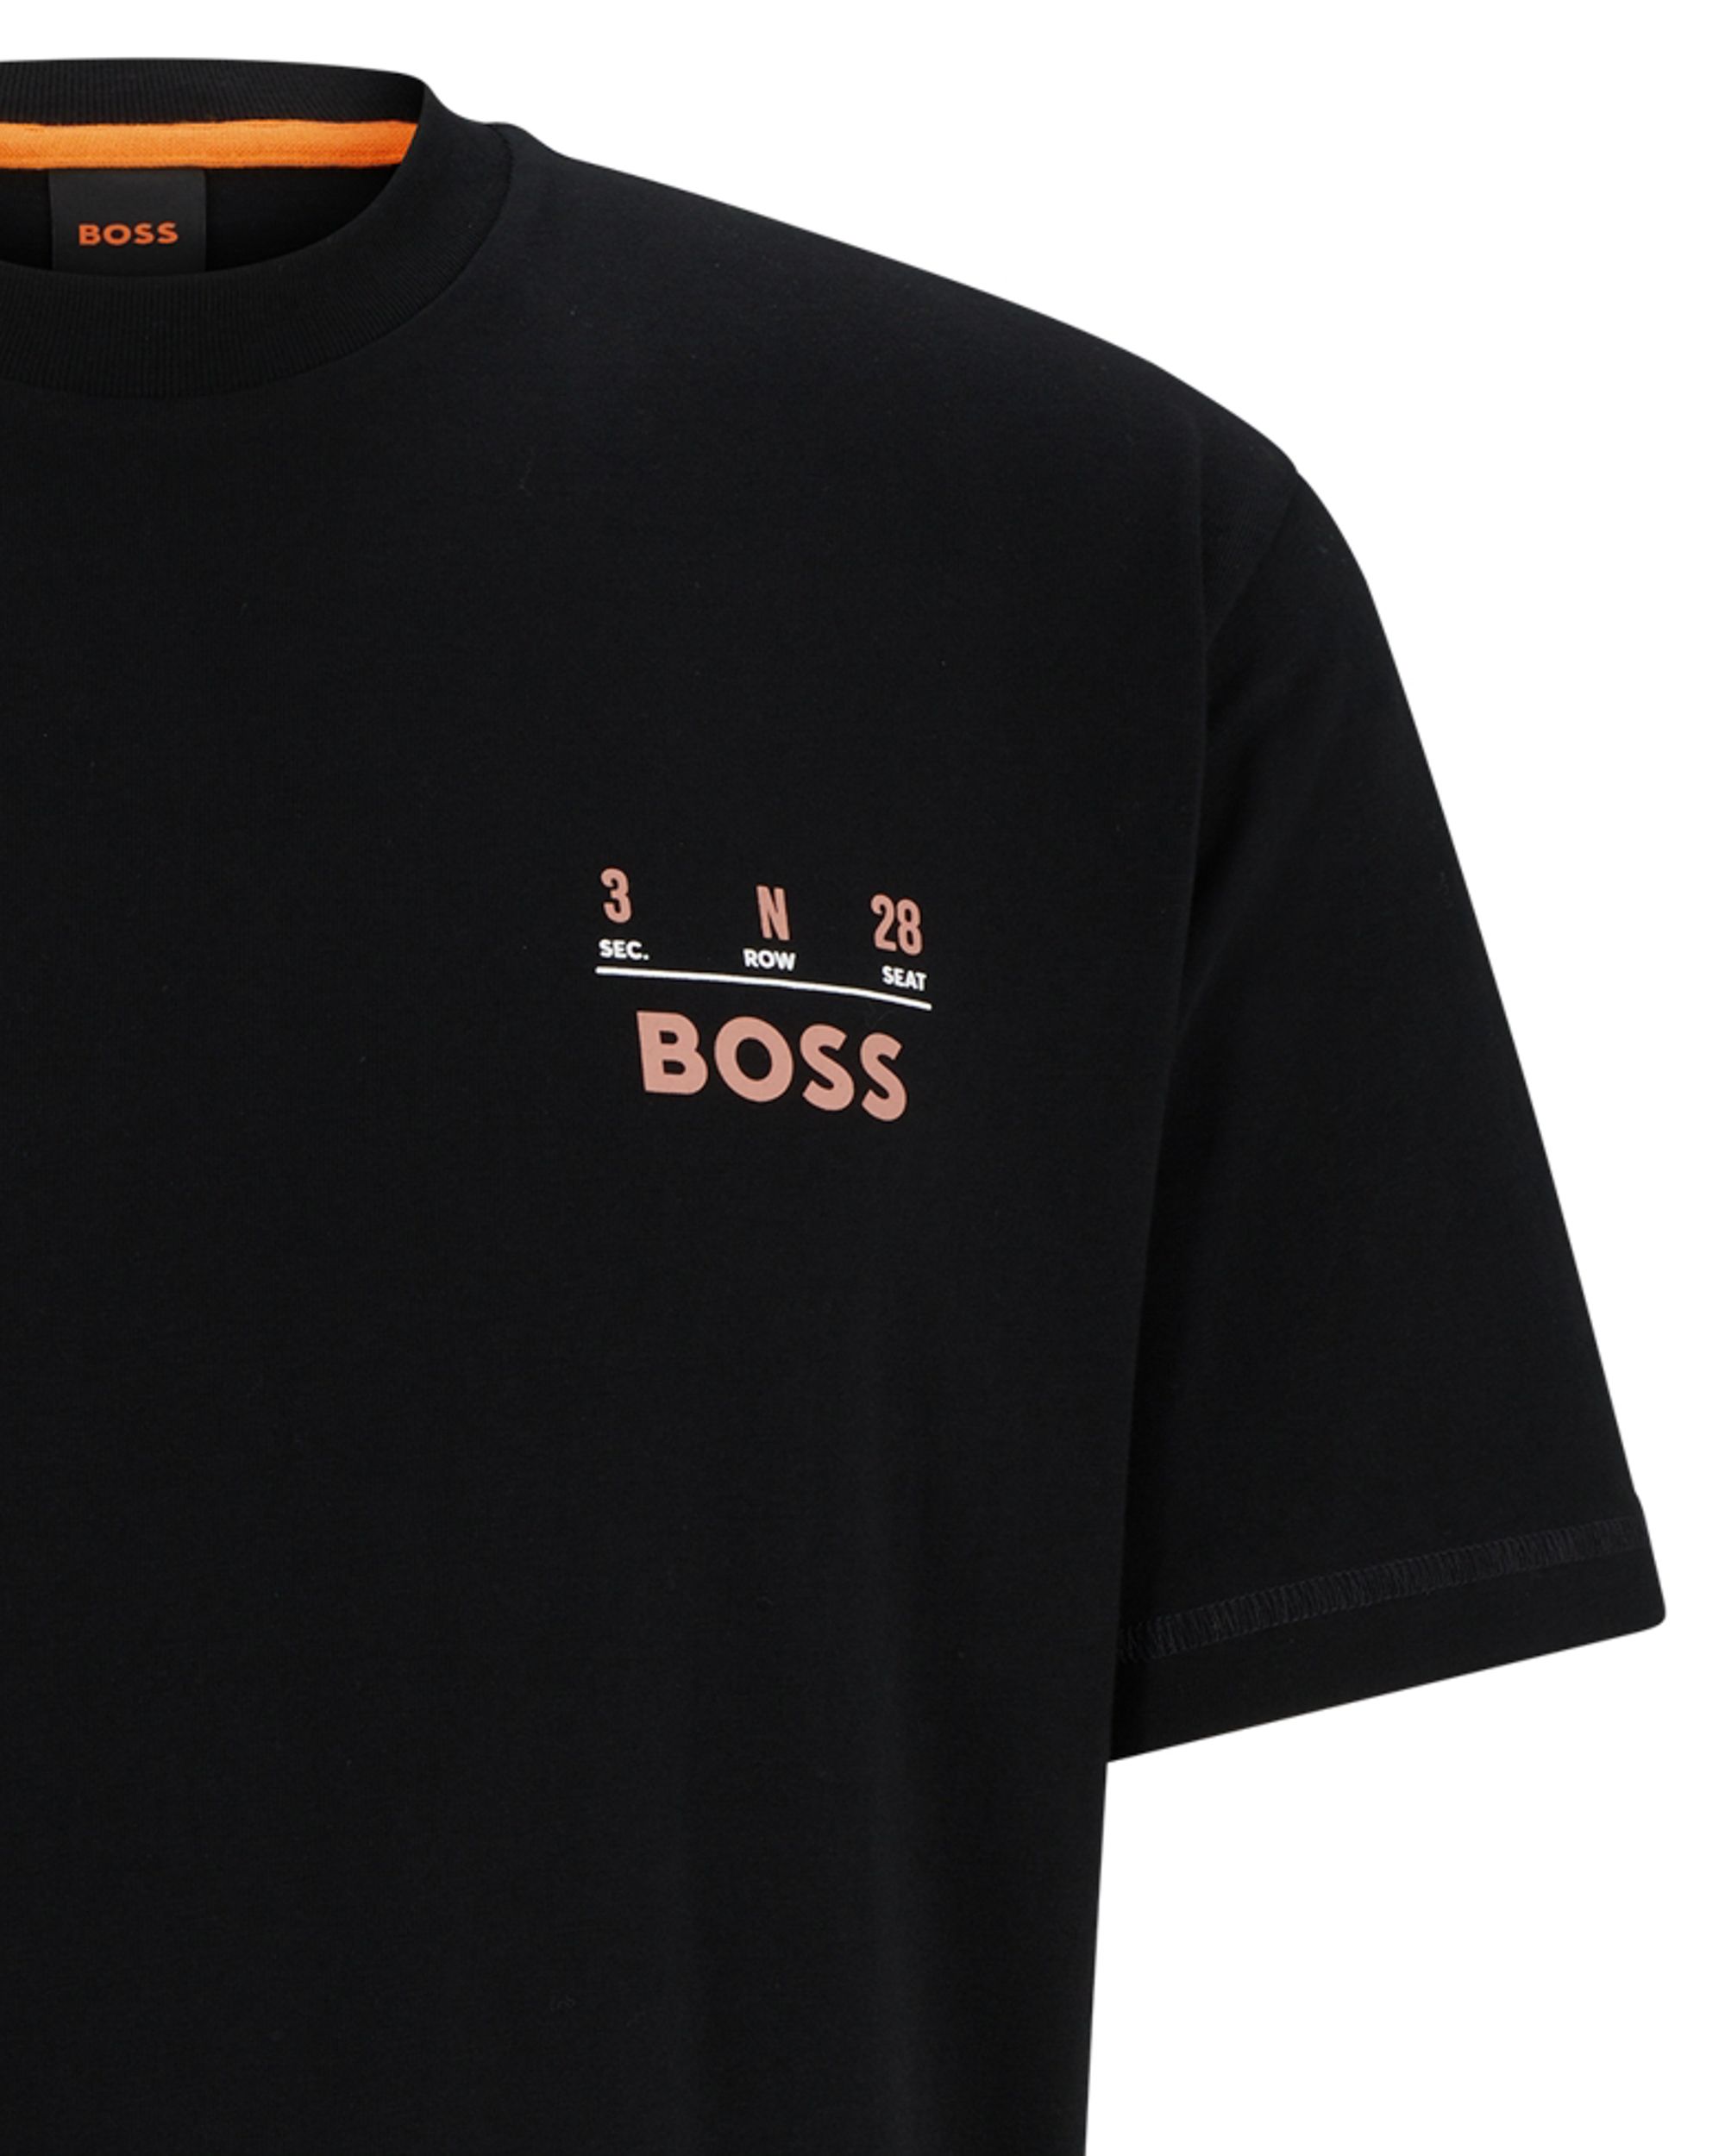 Boss Casual Te_Records T-shirt KM Zwart 094592-001-L